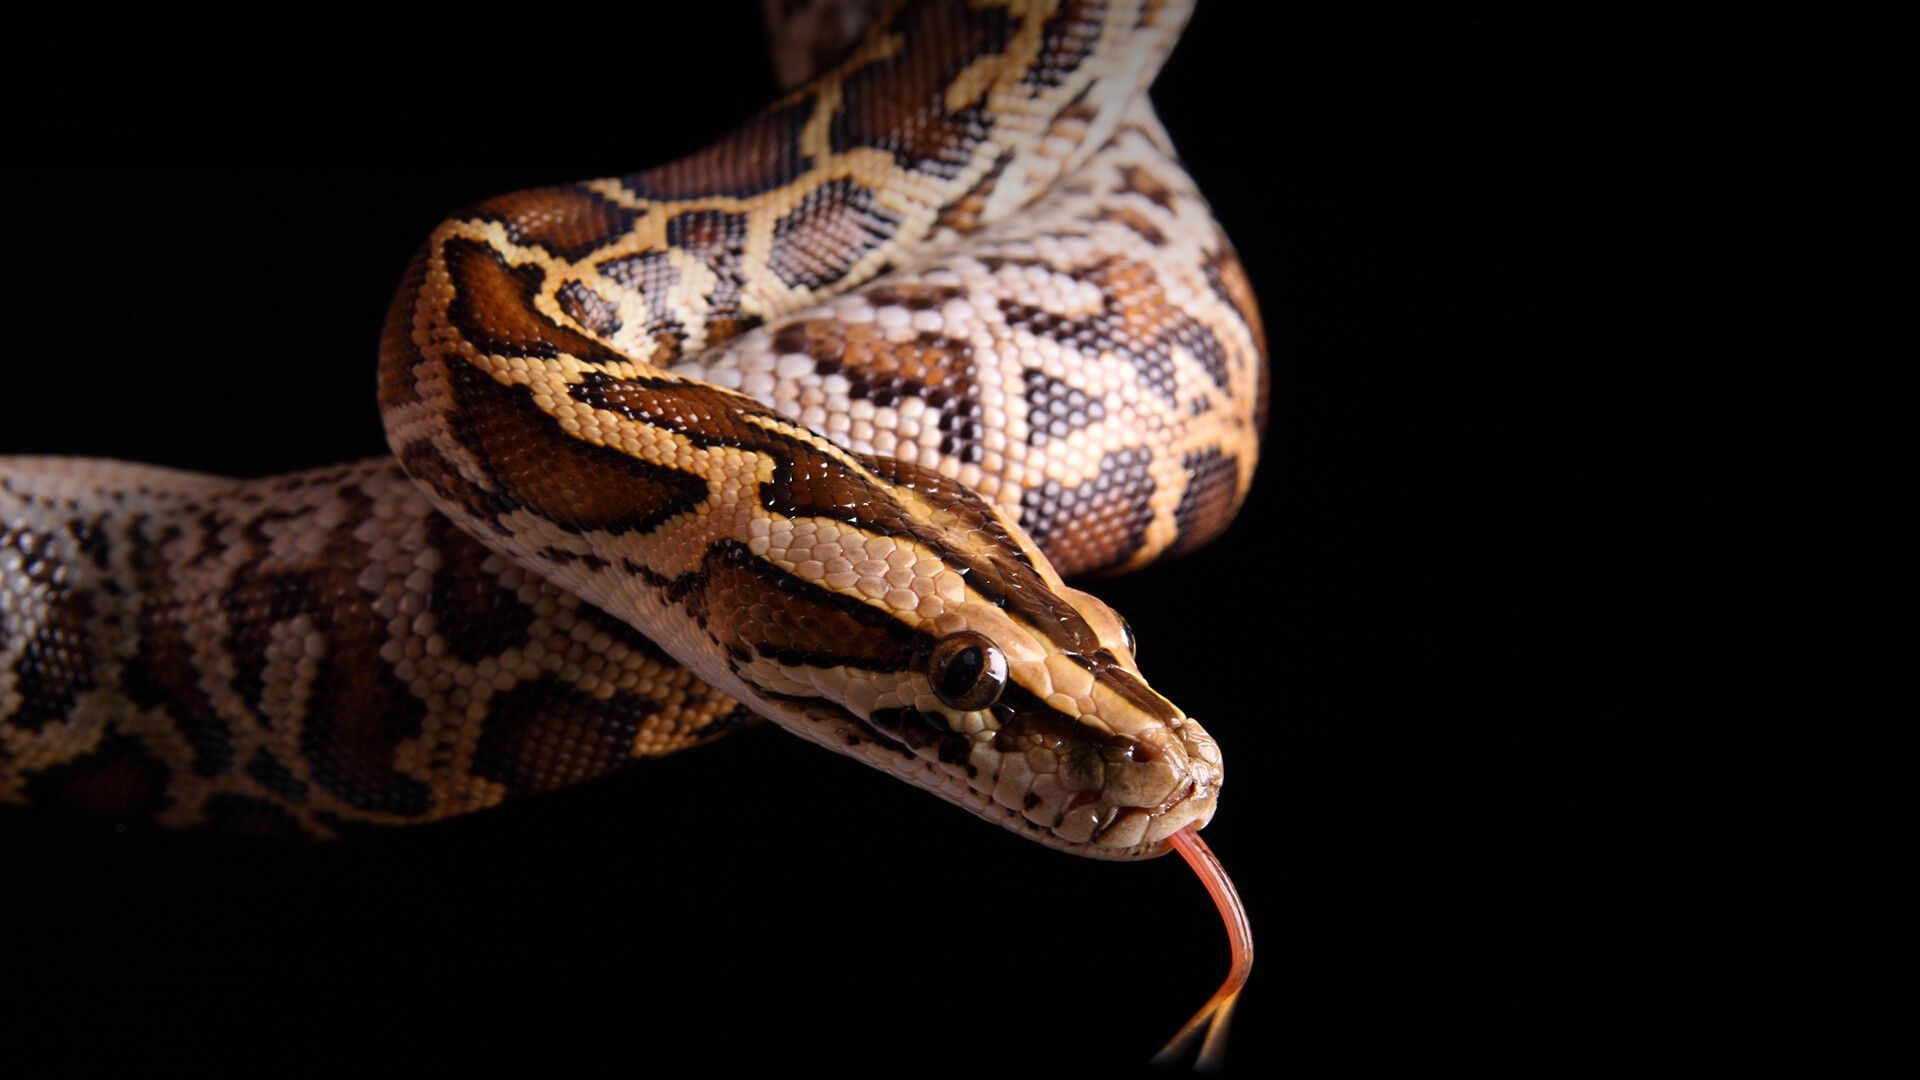 Burmeses python, Black background, Reticulated python, Snake beauty, 1920x1080 Full HD Desktop